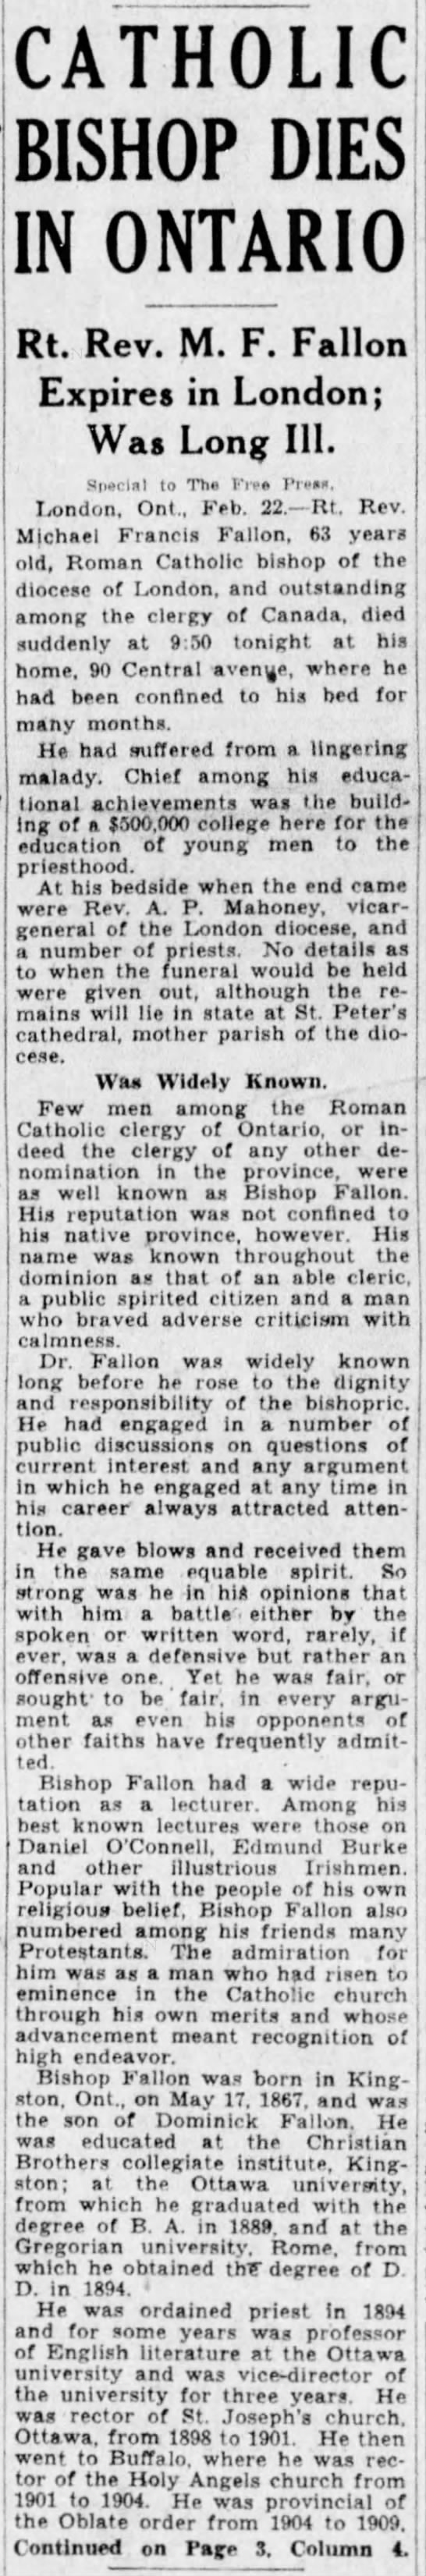 Fallon, Rt. Rev. M.F. Fallon dies in Ontario 1931  Part 1 - 